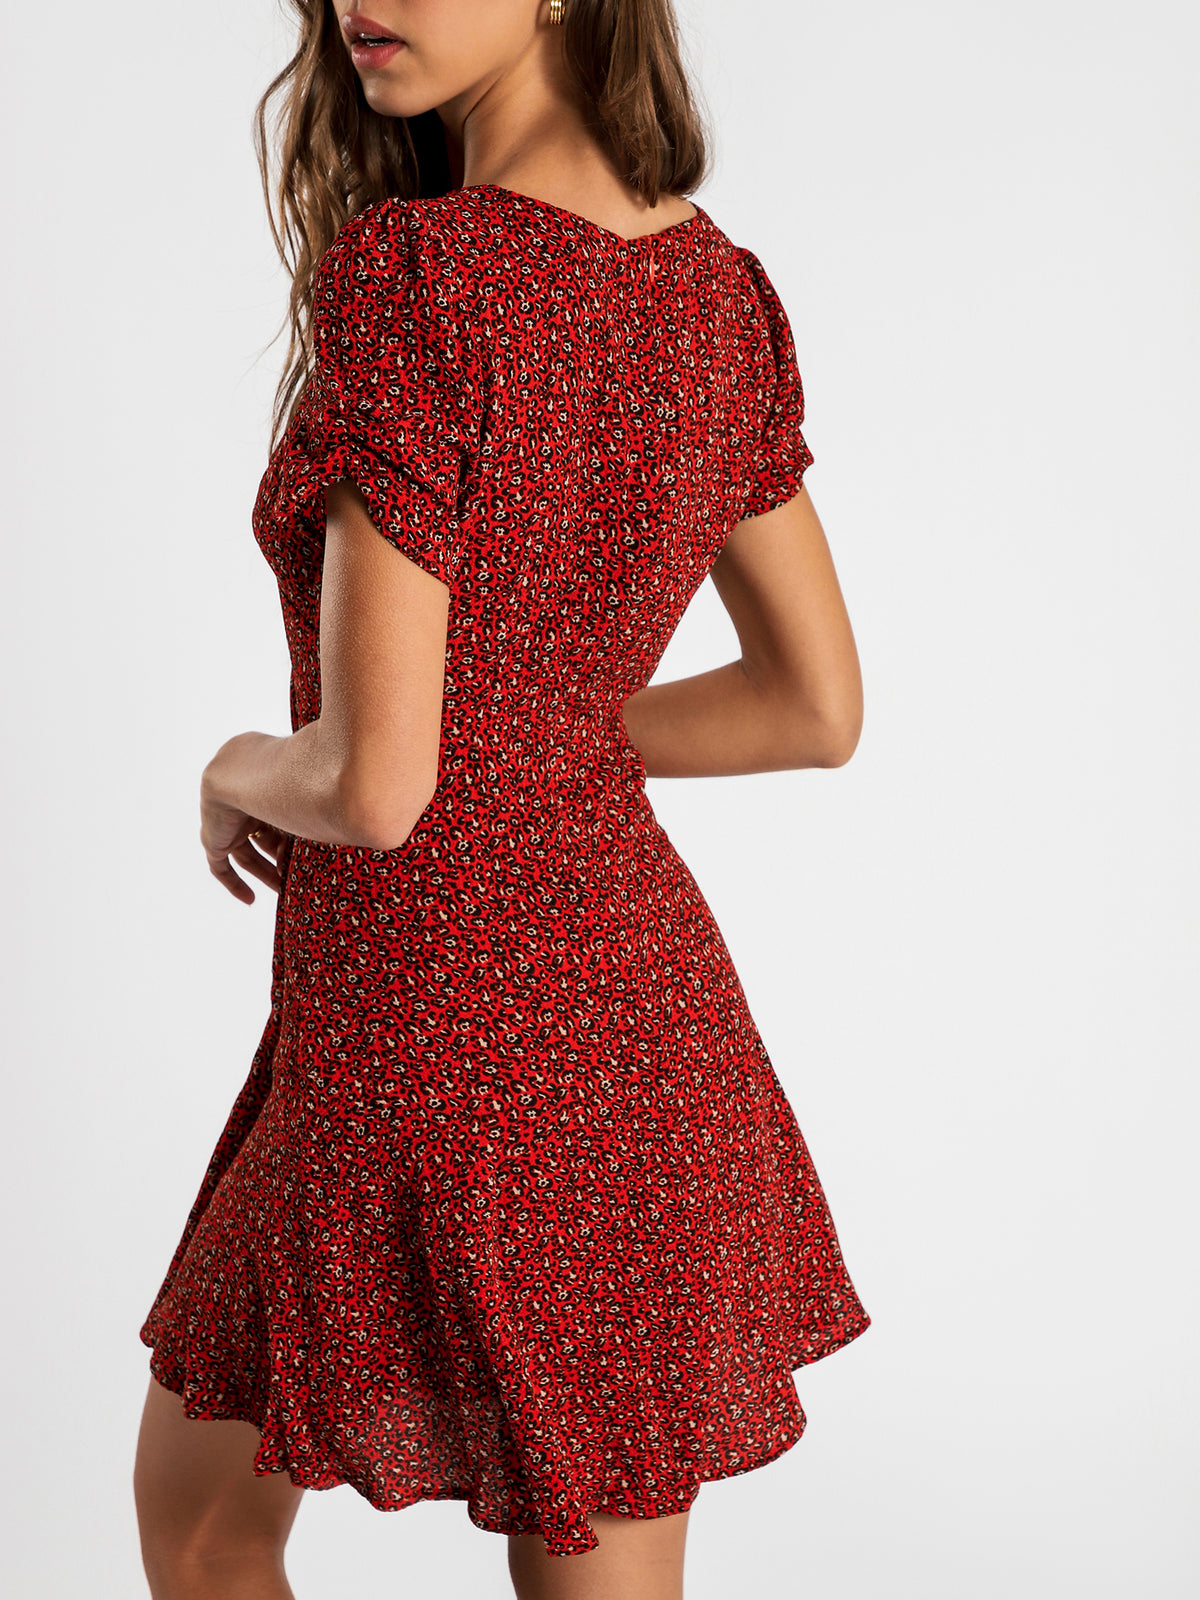 Billie Mini Dress in Red Leopard Print